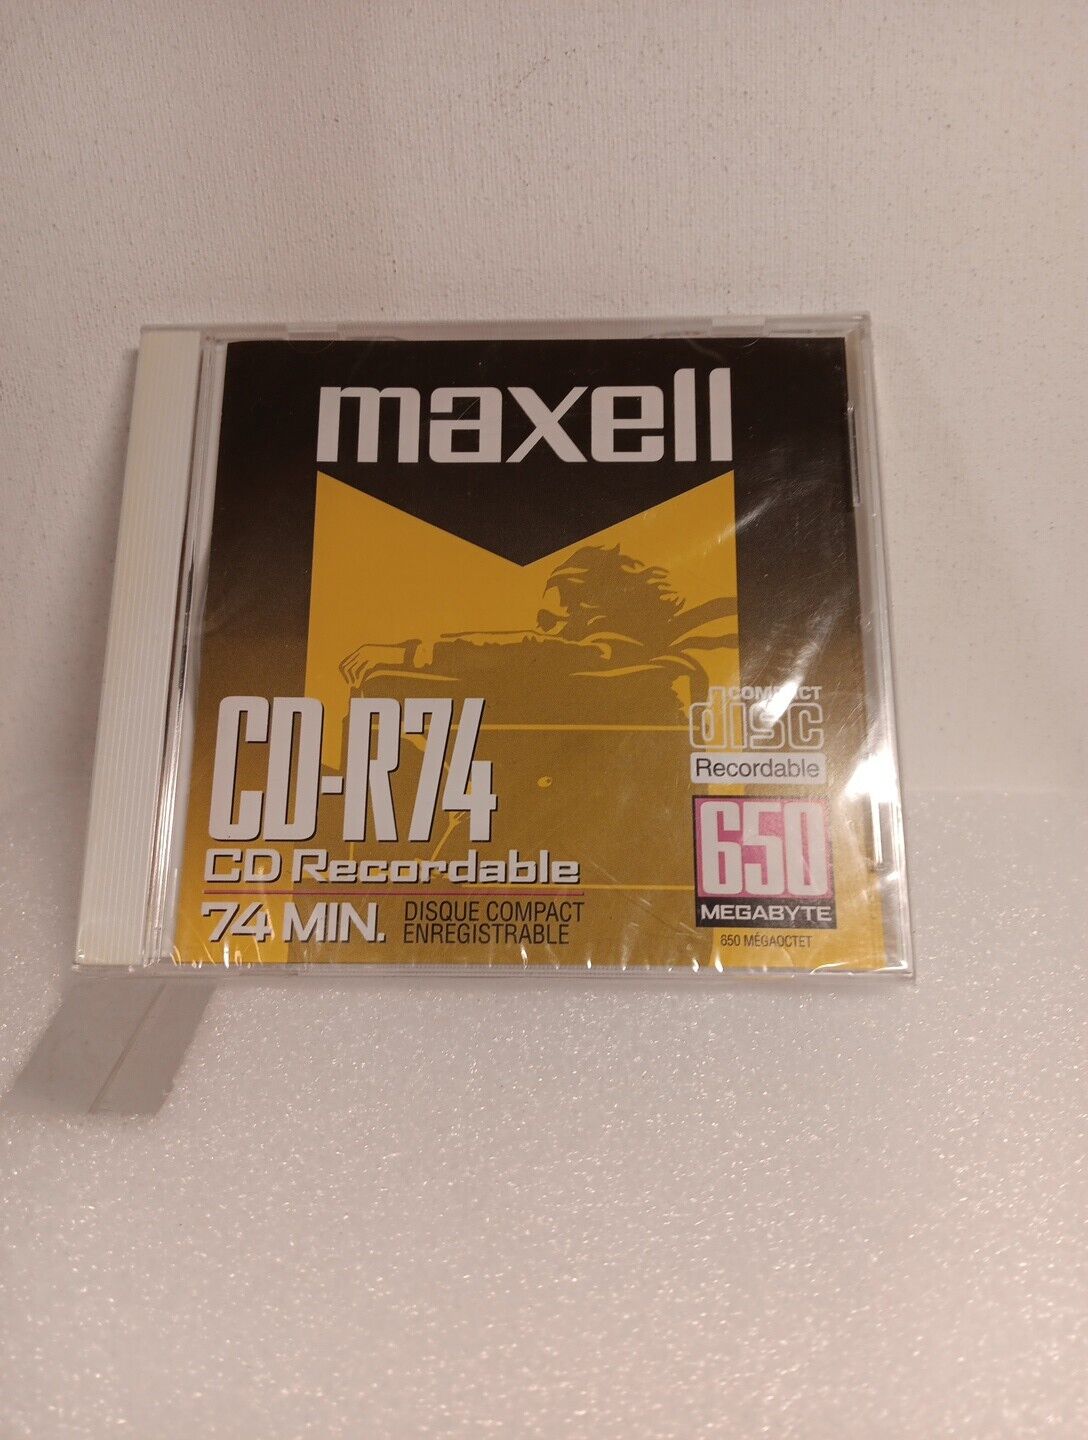 Maxell CD-R74  Recordable CD Compact Disc, 74 Minutes, 650 MB Megabytes